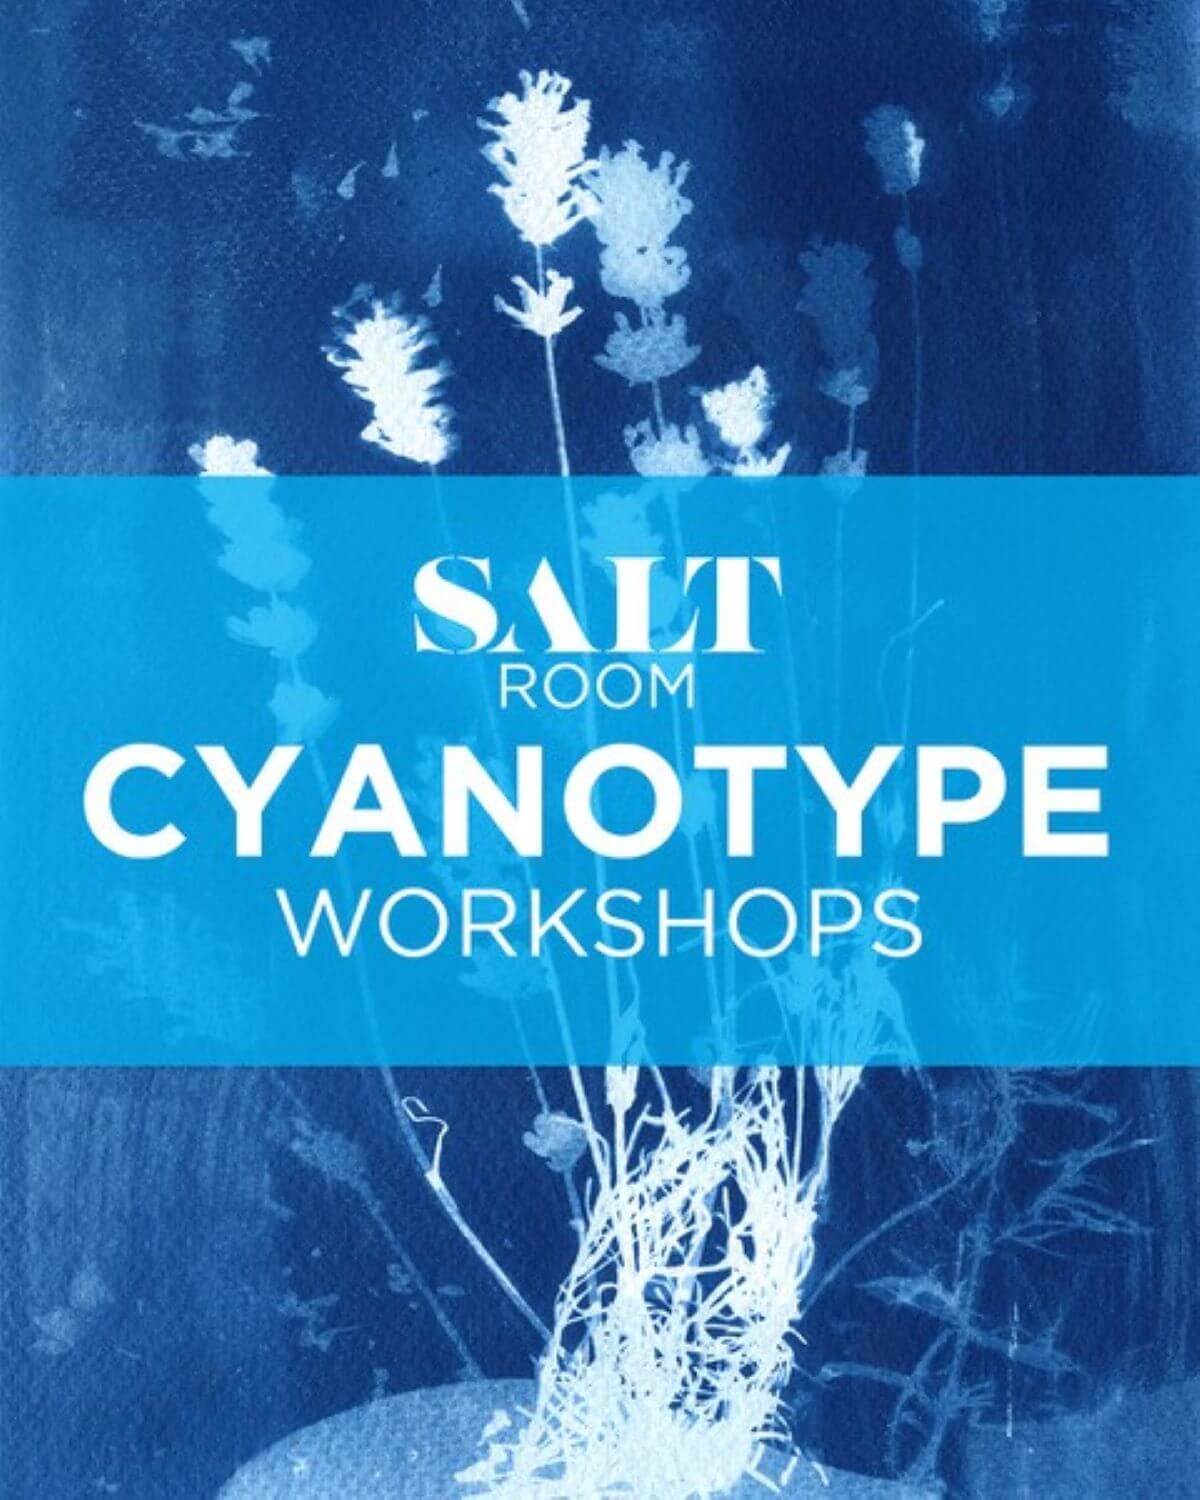 A blue cyanotype print